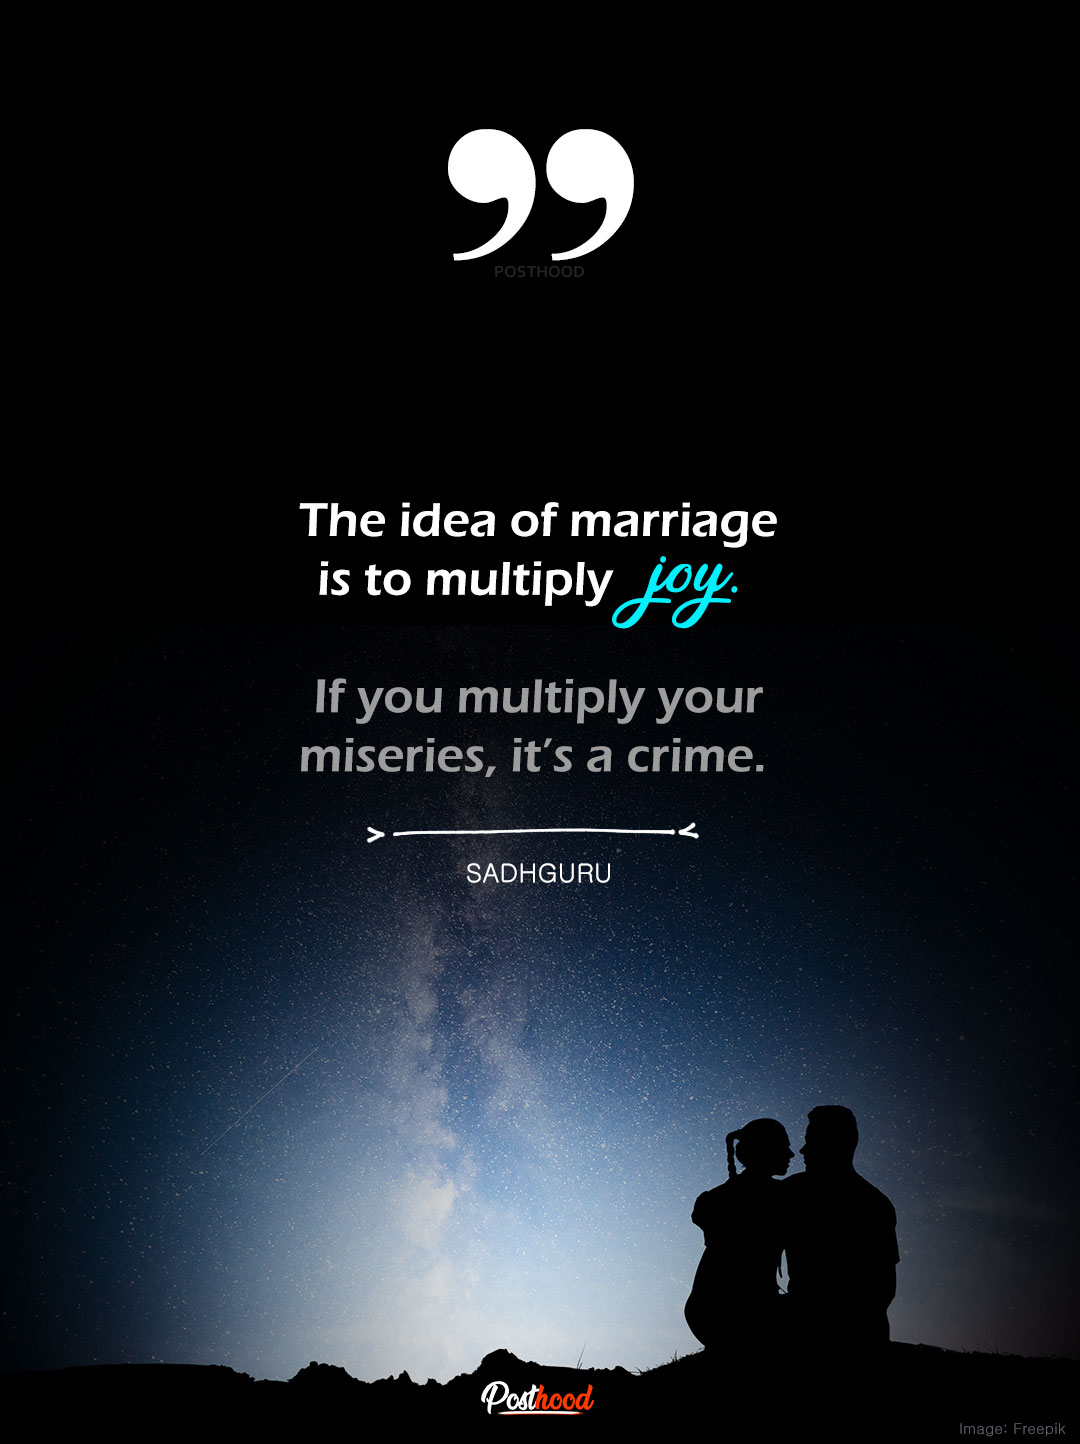 Sadhguru quotes on marriage, Sadhguru quote on love, inspiring quotes on the relationship, Powerful Sadhguru quotes on emotions. 